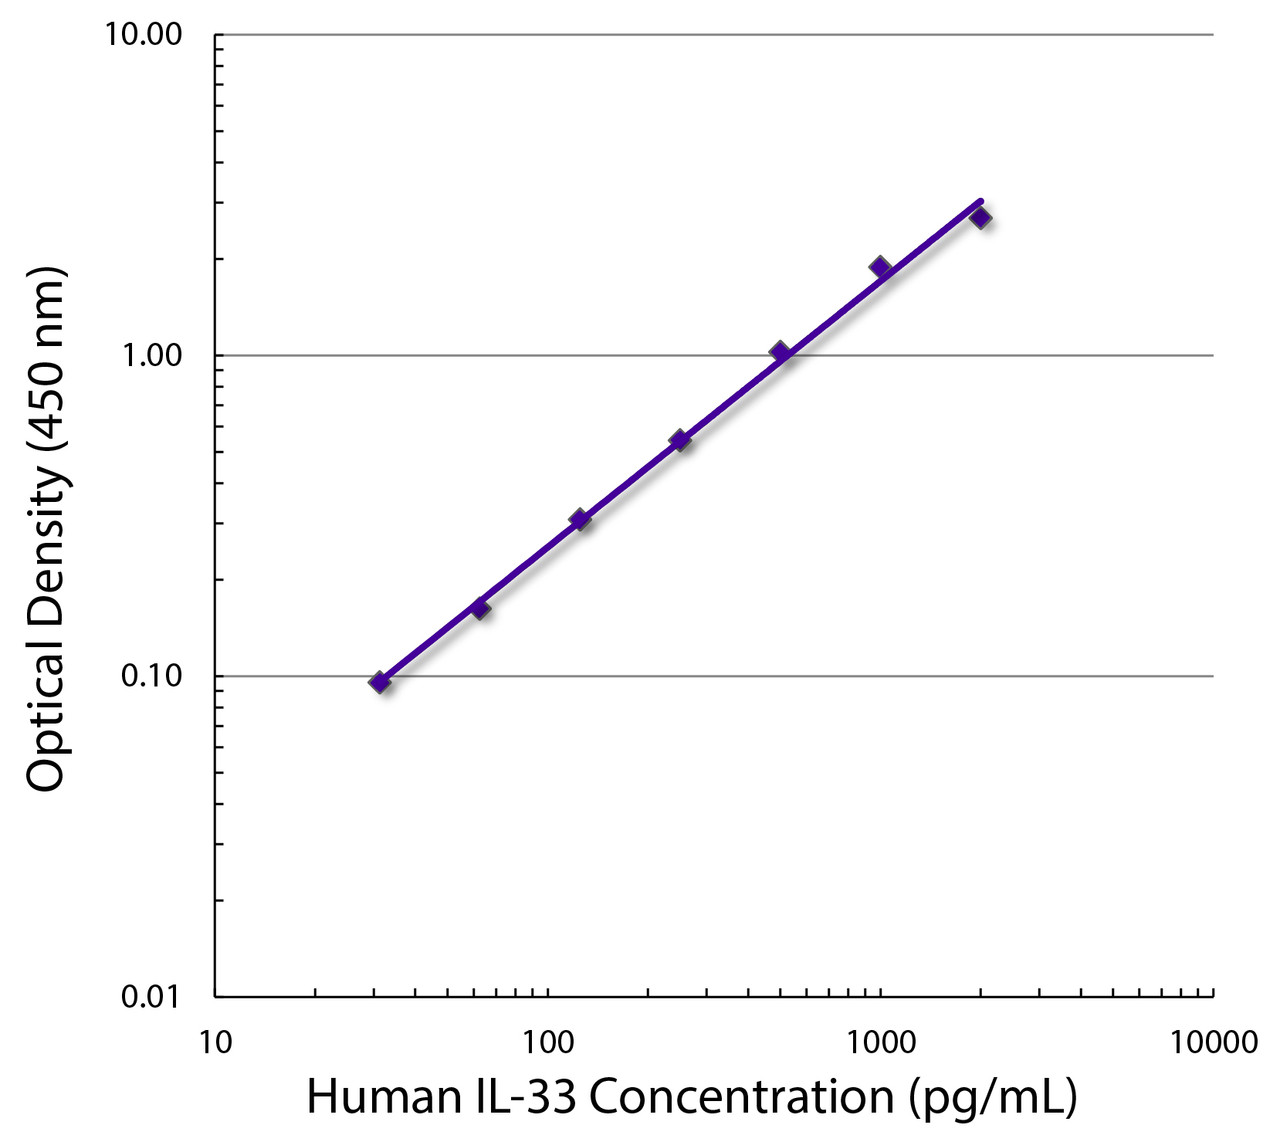 Standard curve generated with Mouse Anti-Human IL-33-UNLB (Cat. No. 15710-01; Clone SB127j) and Mouse Anti-Human IL-33-BIOT (Cat. No. 99-798; Clone SB127c) followed by Streptavidin-HRP